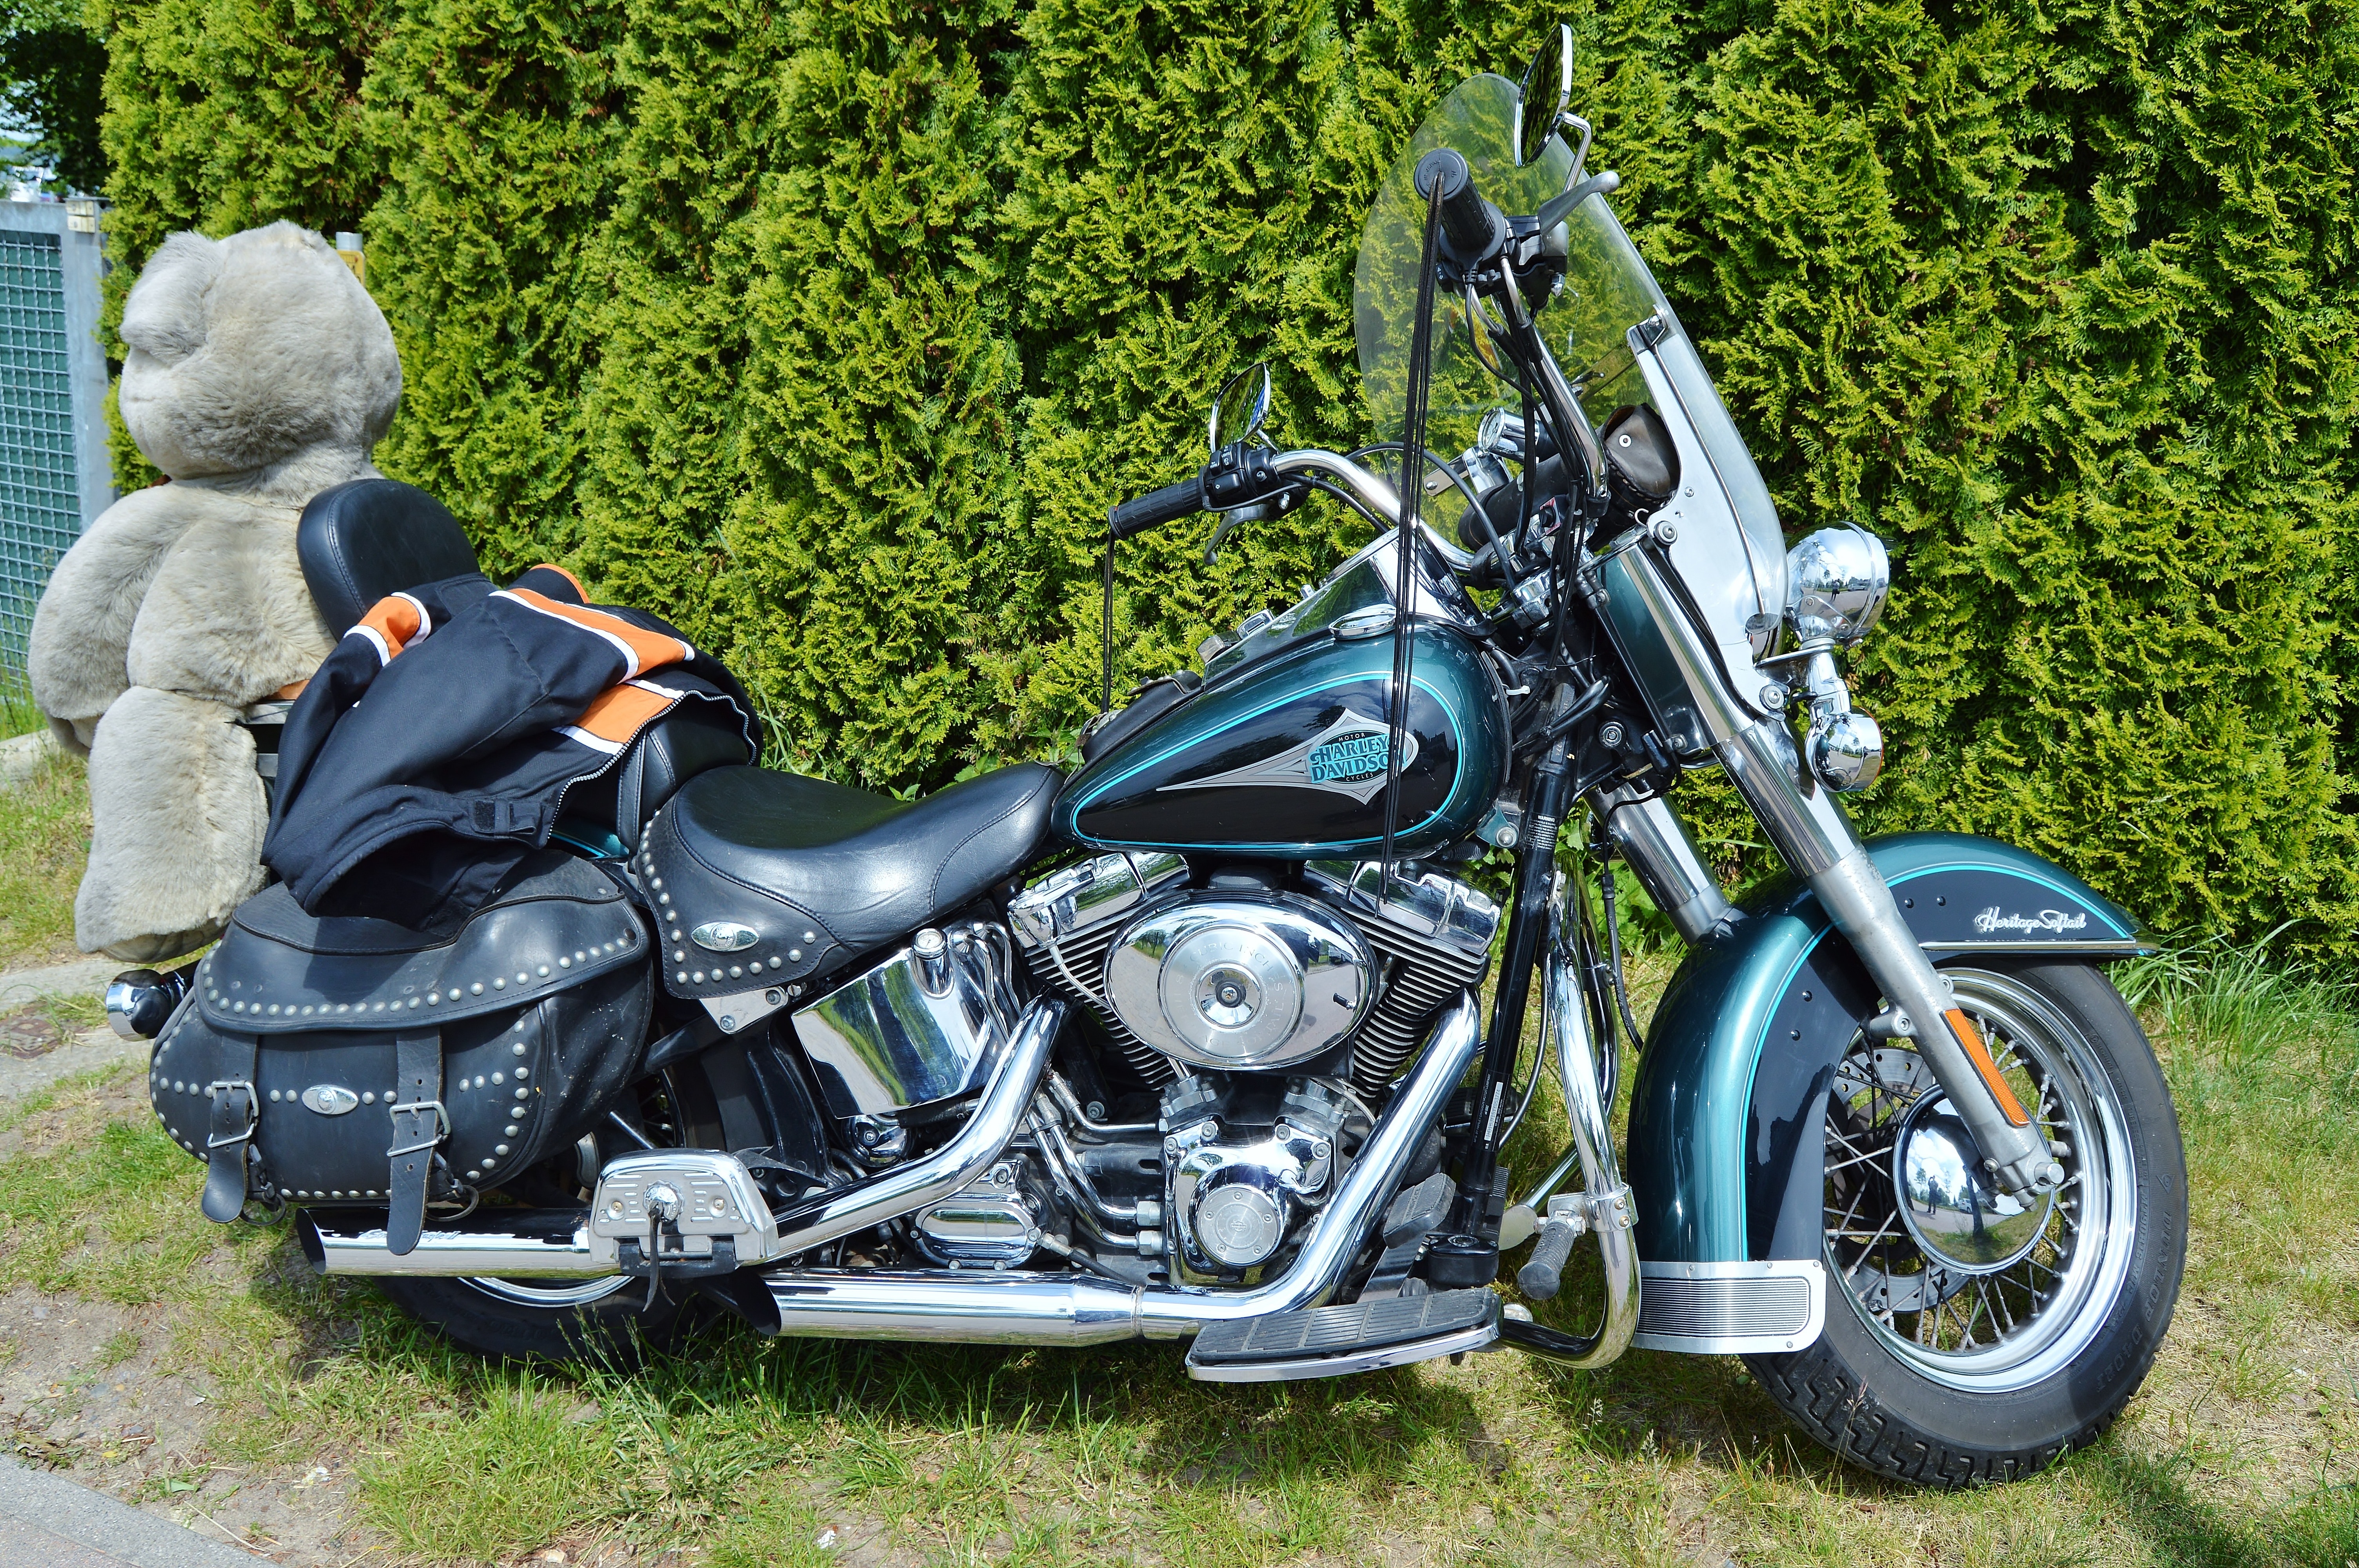 Motorcycle, Harley Davidson, Blue, motorcycle, transportation